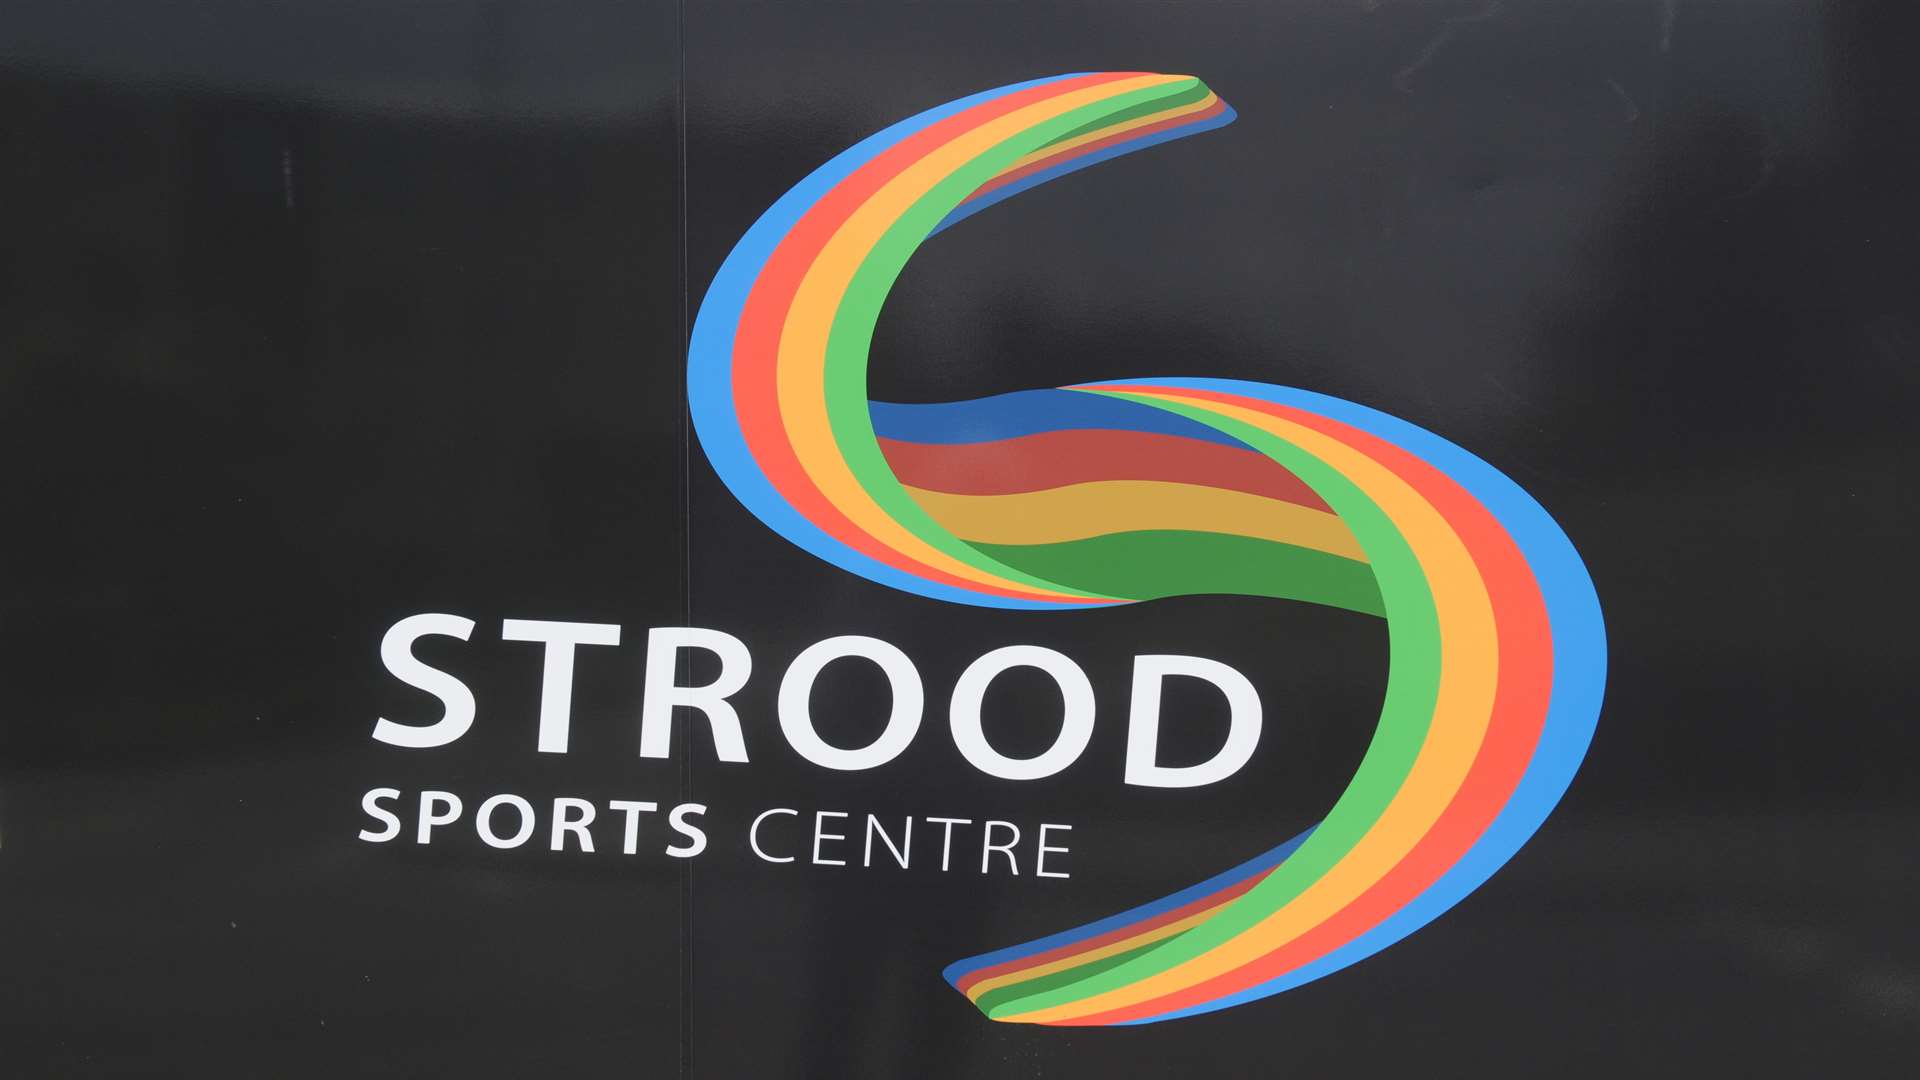 Strood Sport Centre suffered a break in.